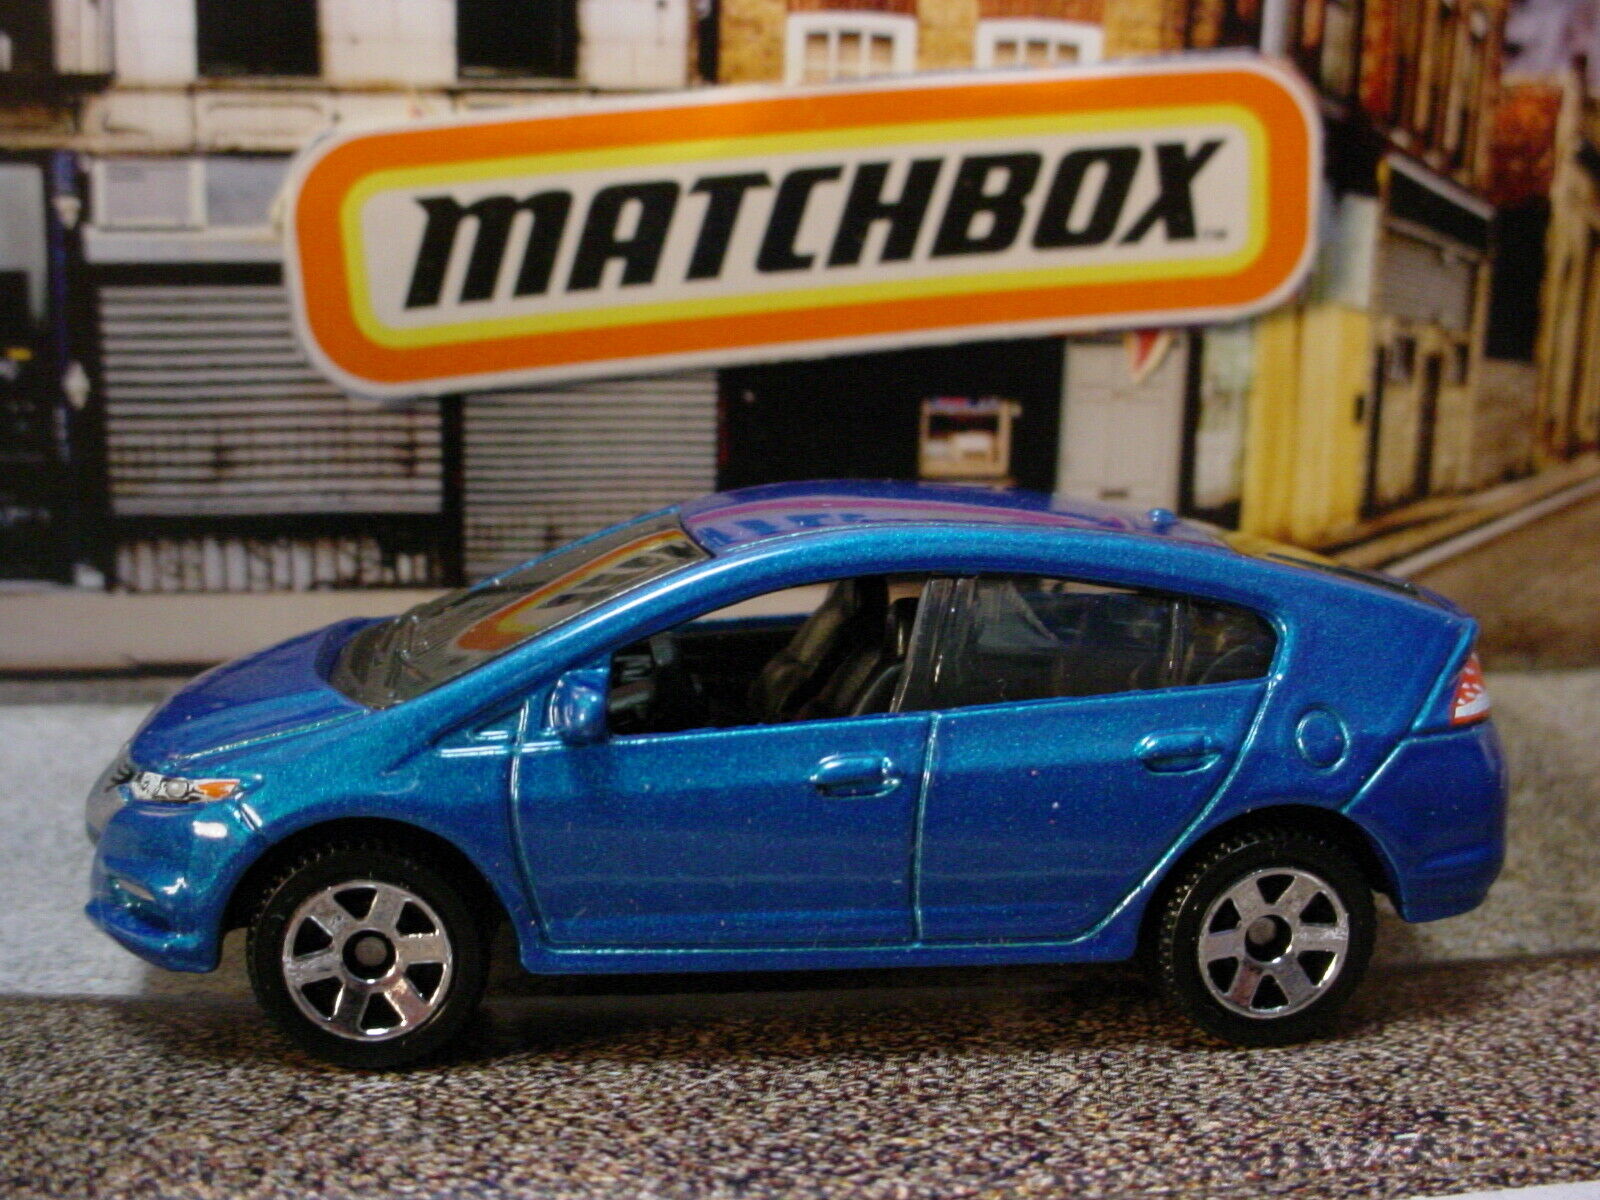 2022 MBX ⚡ ELECTRIC DRIVERS Series 2010 HONDA INSIGHT ☀ blue⚡ Matchbox  LOOSE | eBay